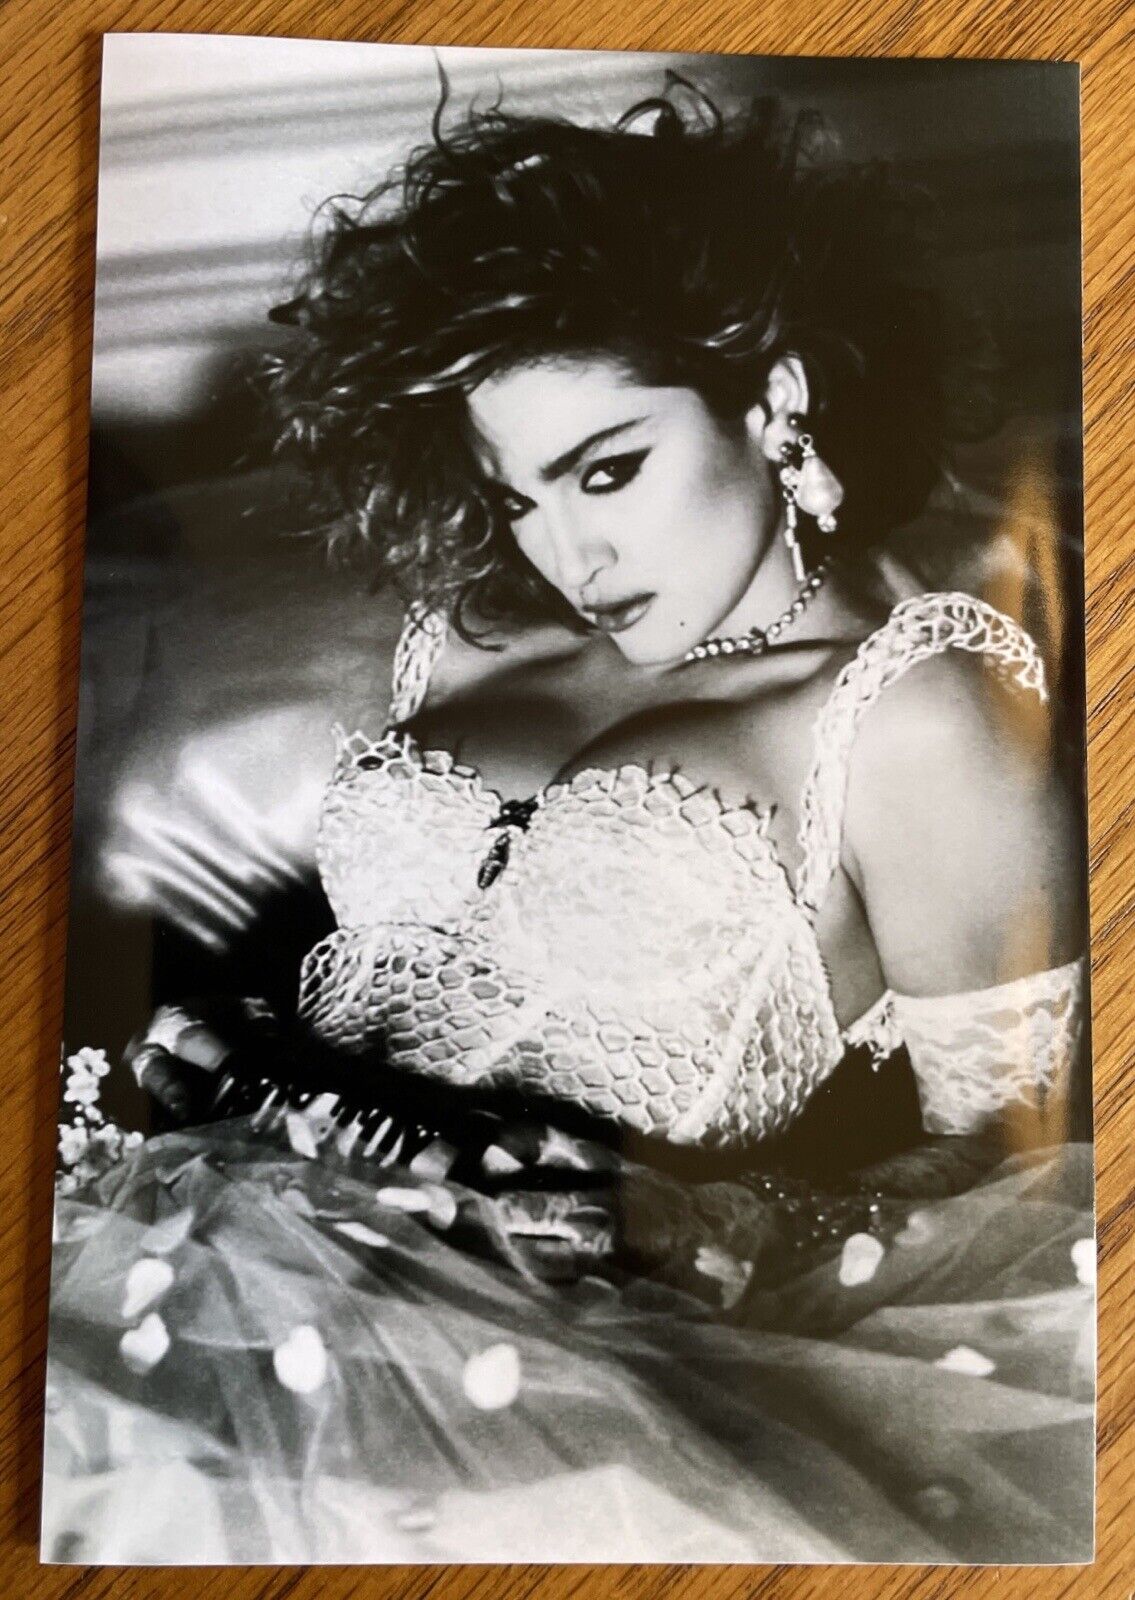 Madonna "1980s Music Icon" Like A Virgin 4x6 Bw Glossy Photo, Cd Photo! ( New! )